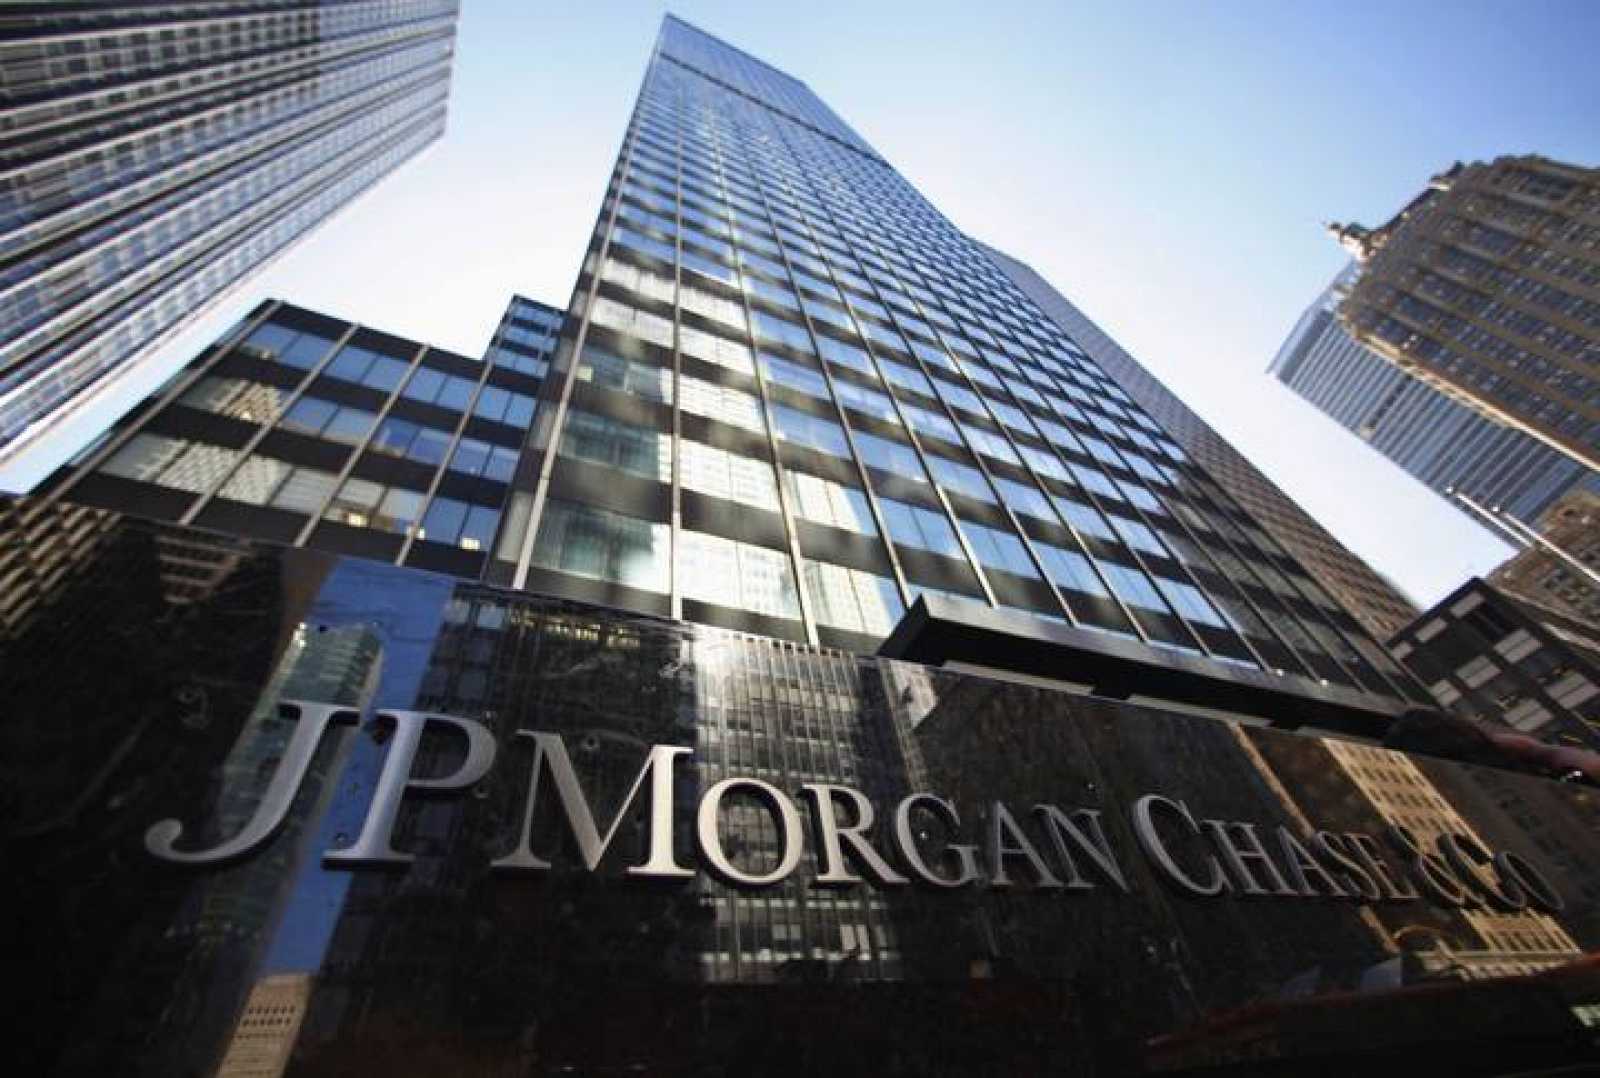 JP Morgan como invertir